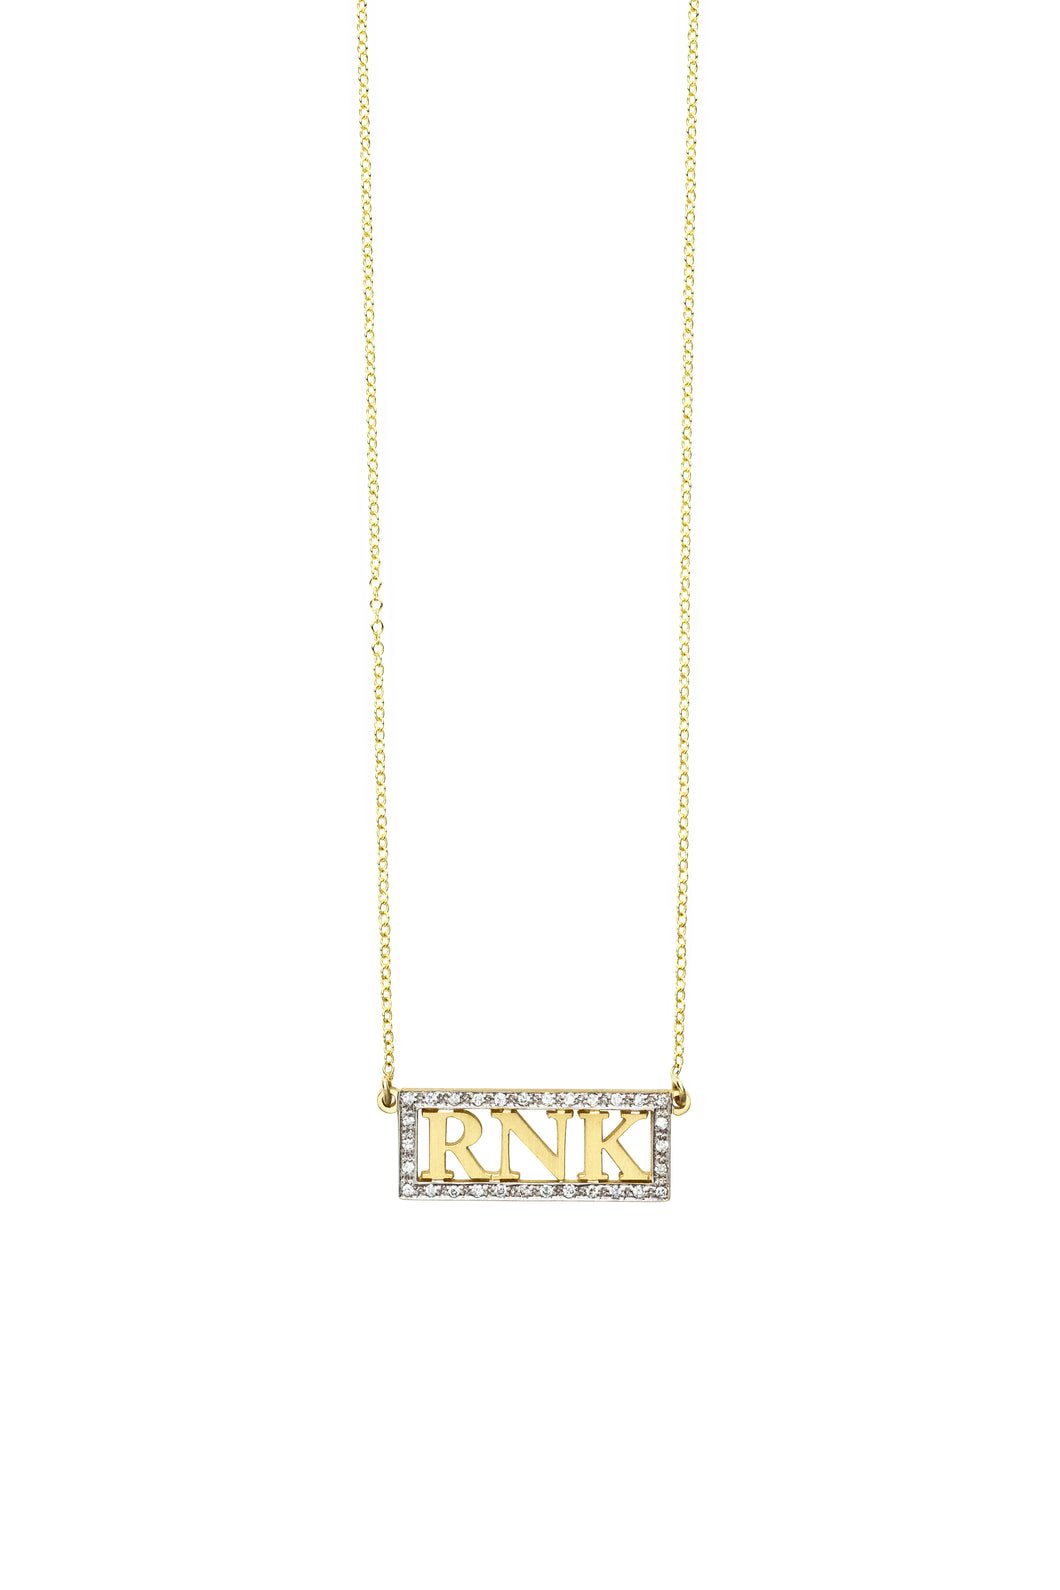 Block Letter Horizontal Monogram Necklace with White Diamonds | Kacey K Jewelry.